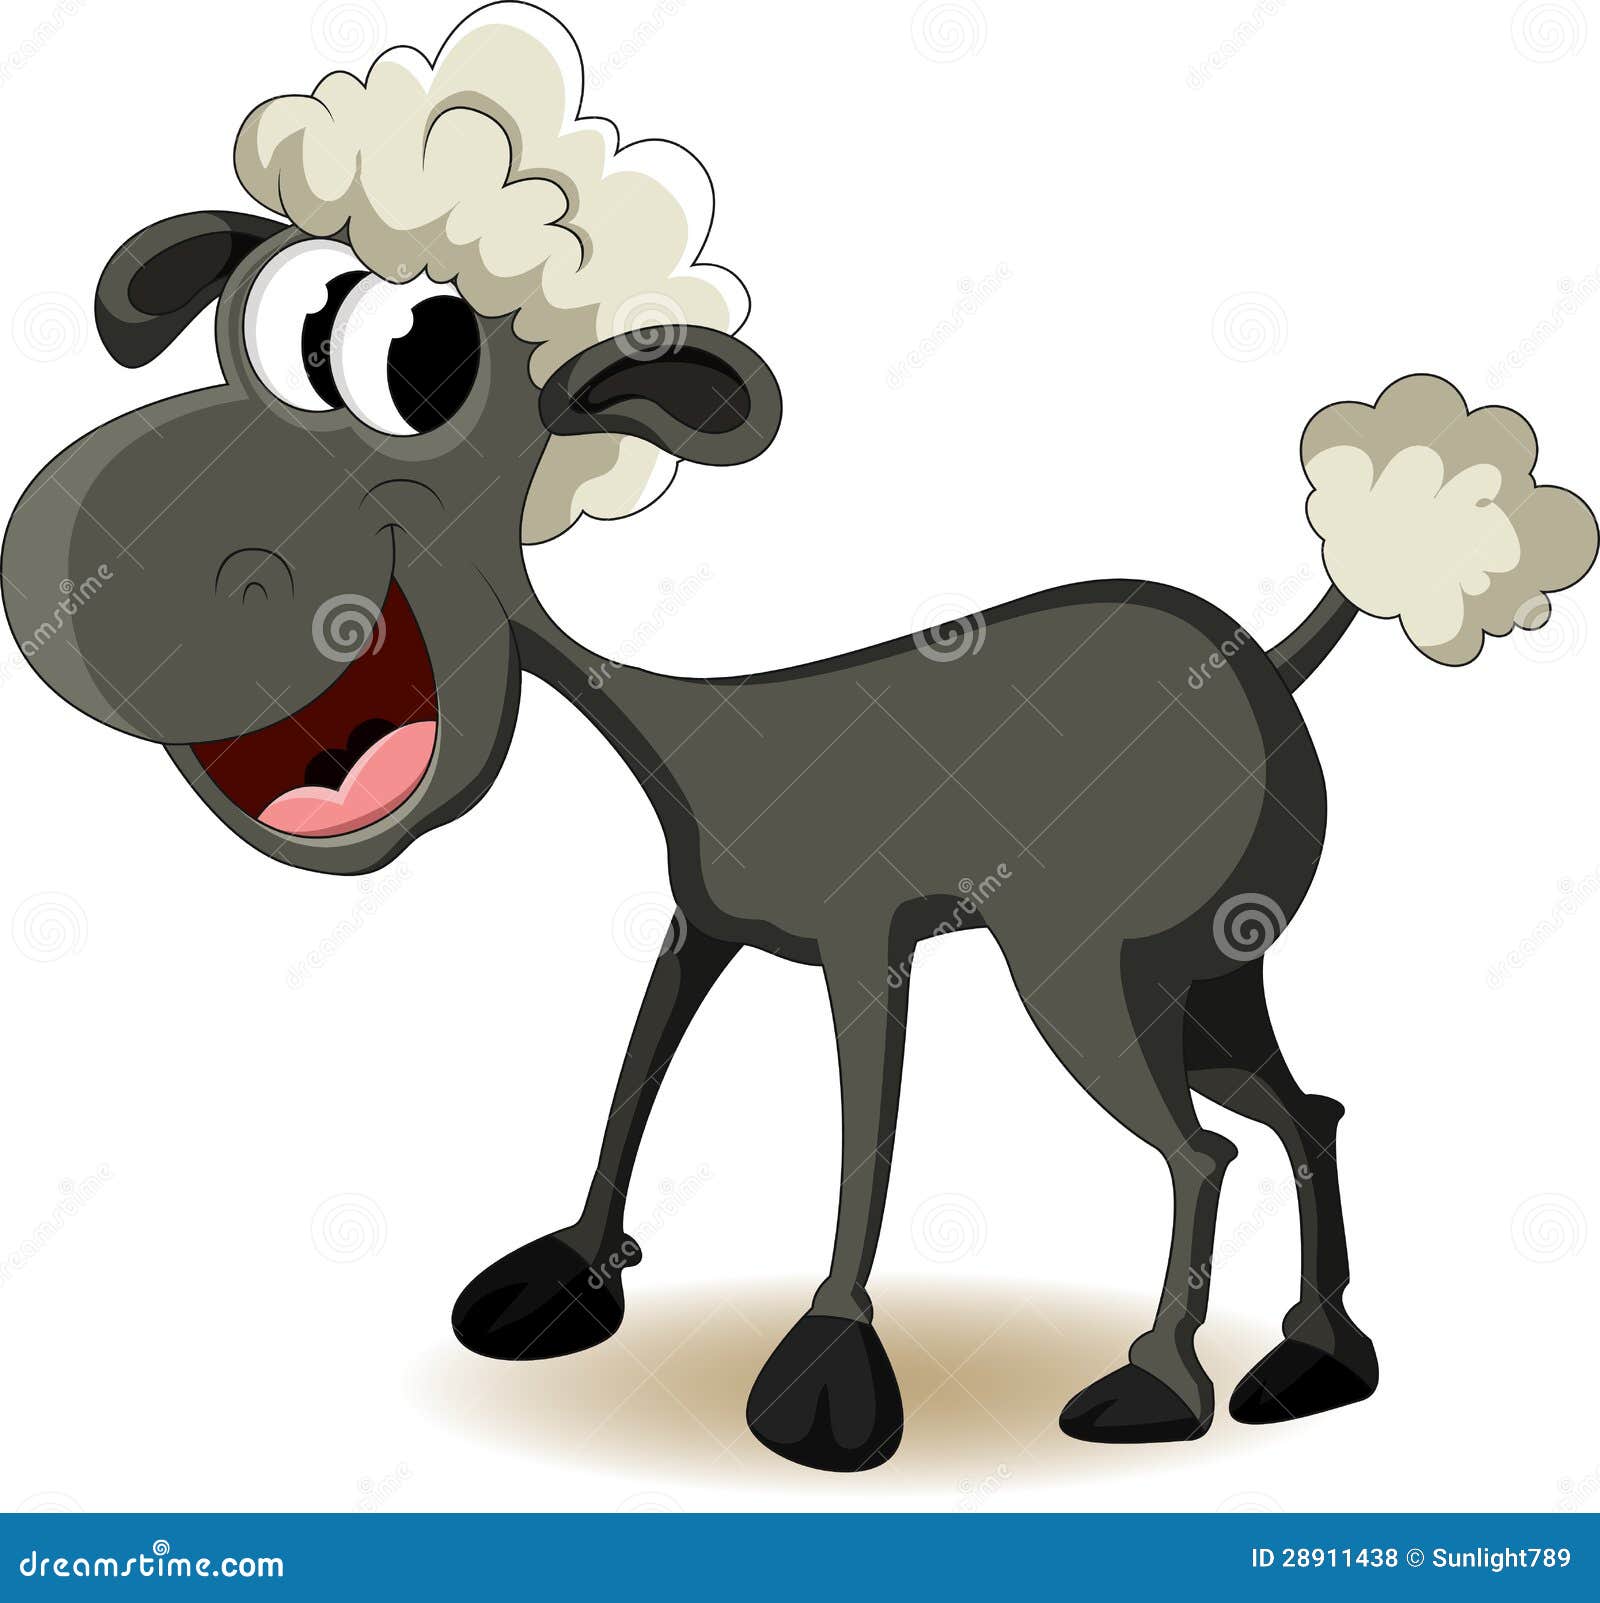 Funny Sheep Cartoon Royalty Free Stock Photos - Image: 28911438